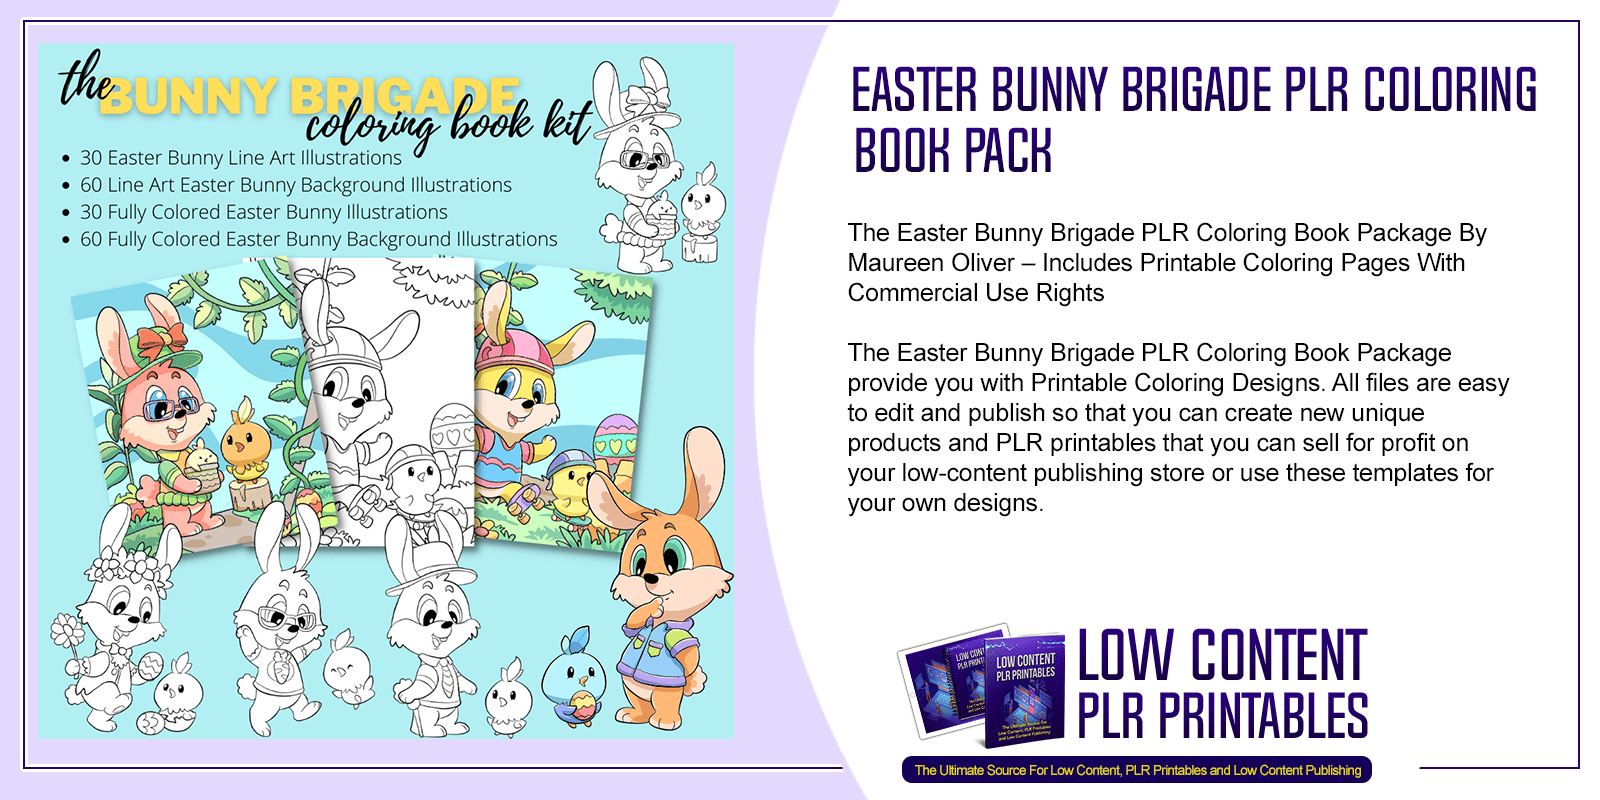 Easter Bunny Brigade PLR Coloring Book Pack